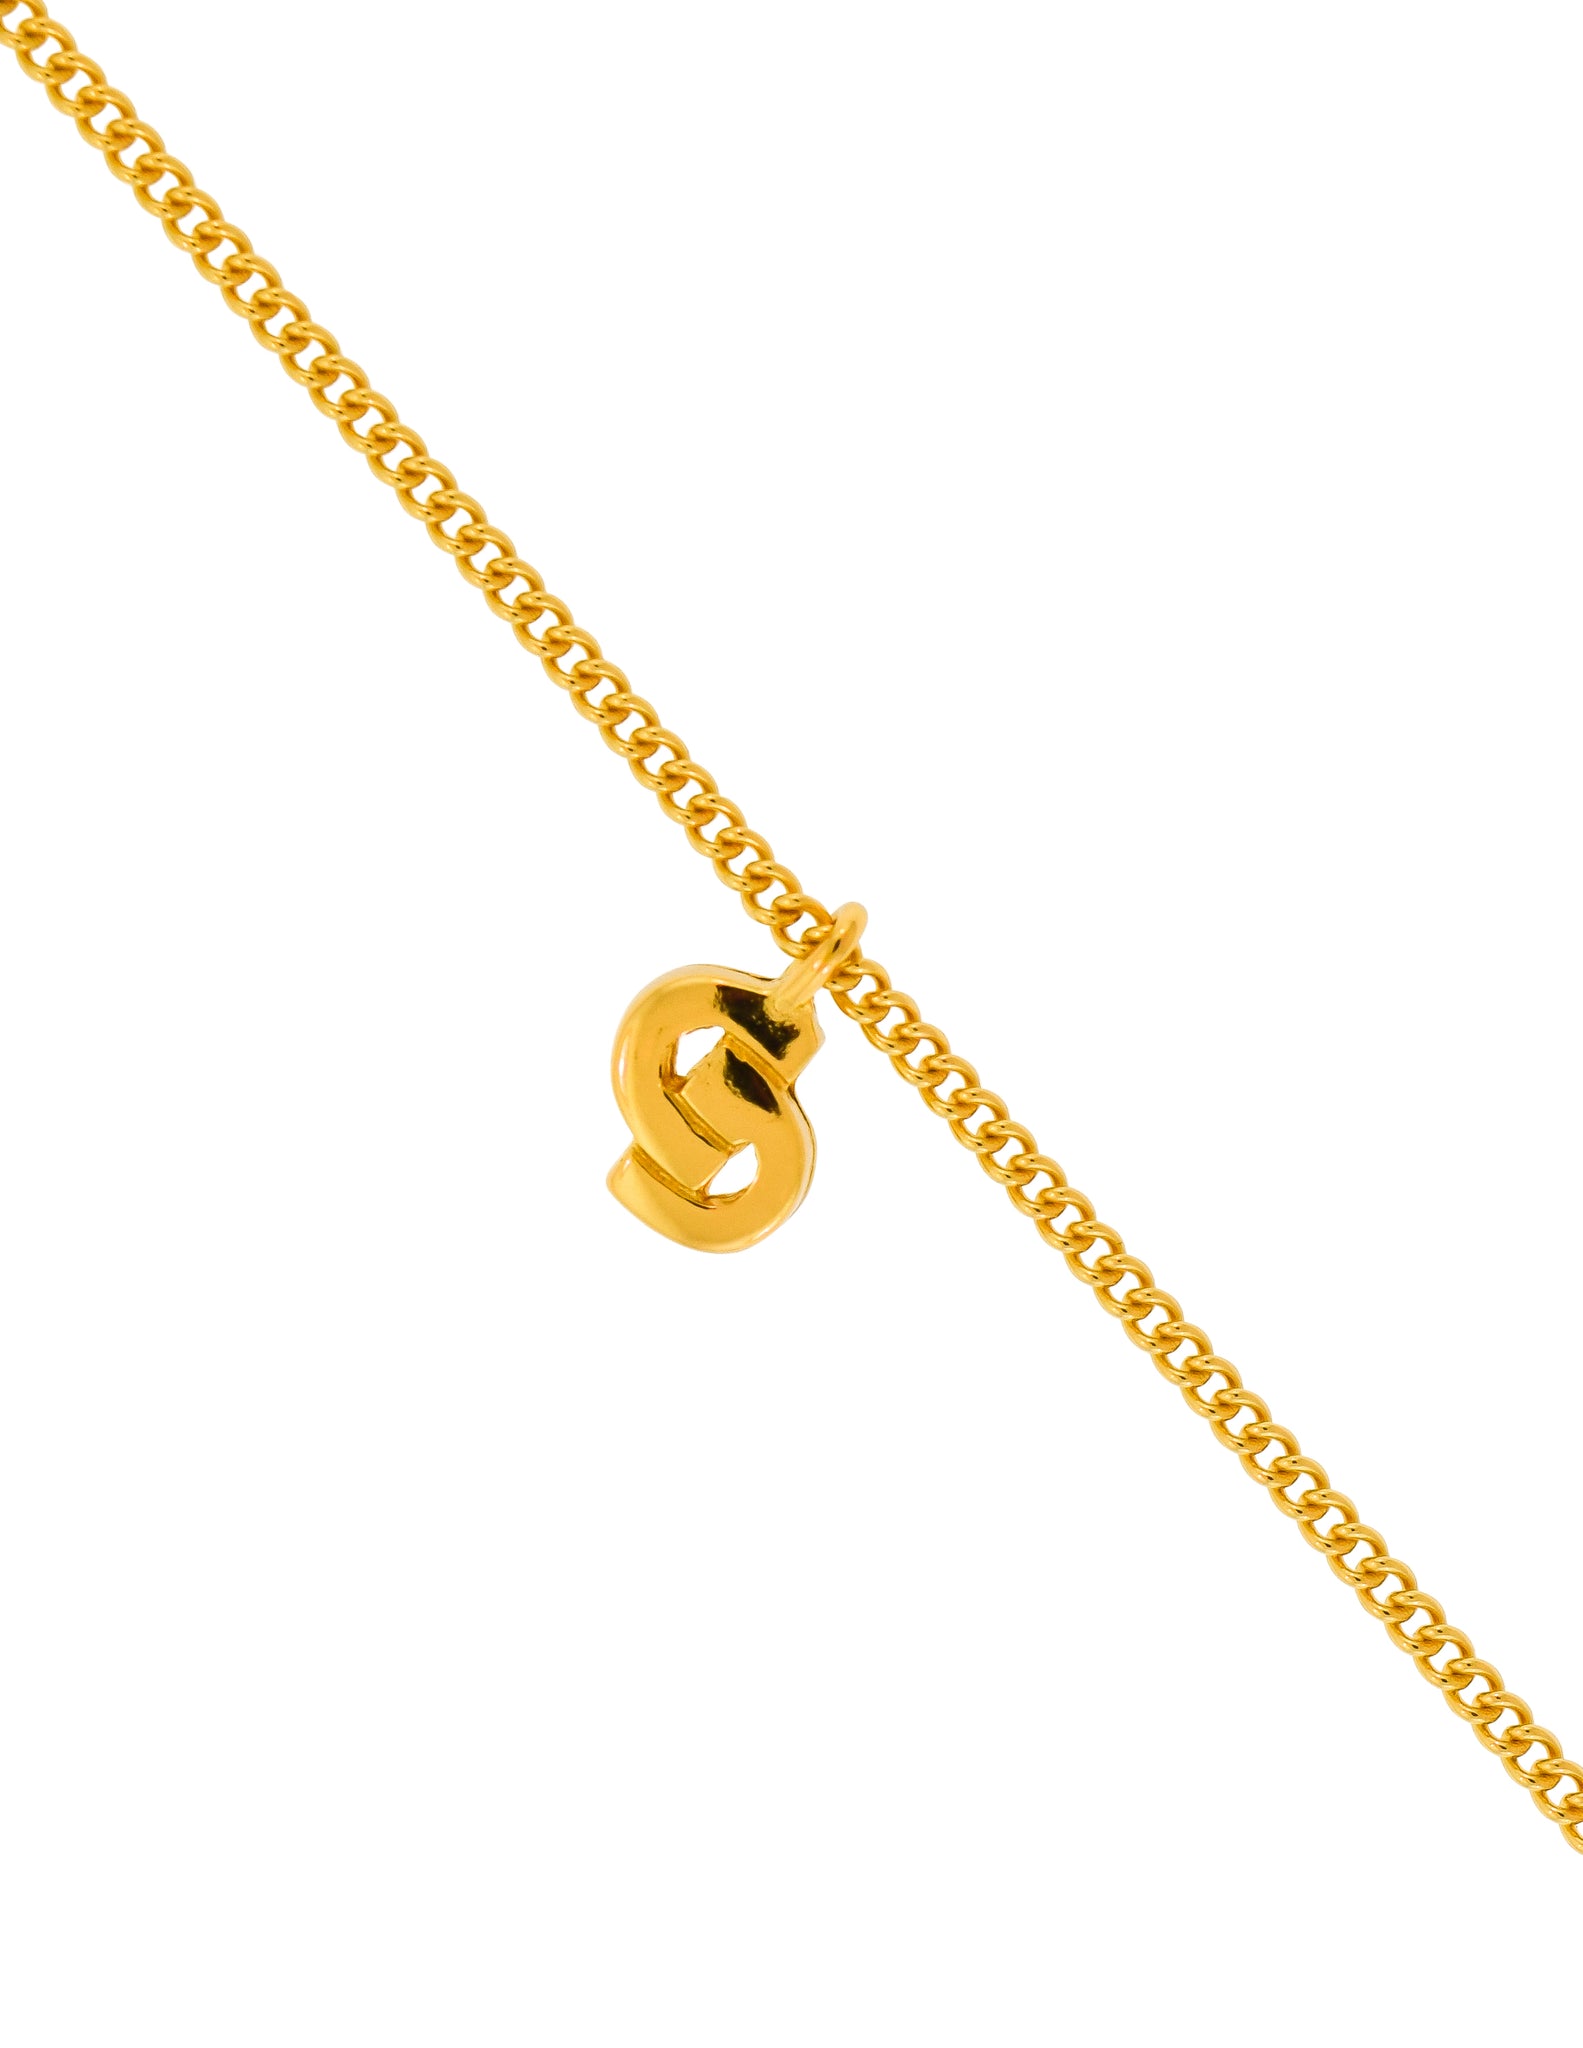 Christian Dior Vintage Gold Mini CD Logo Charm Chain Bracelet